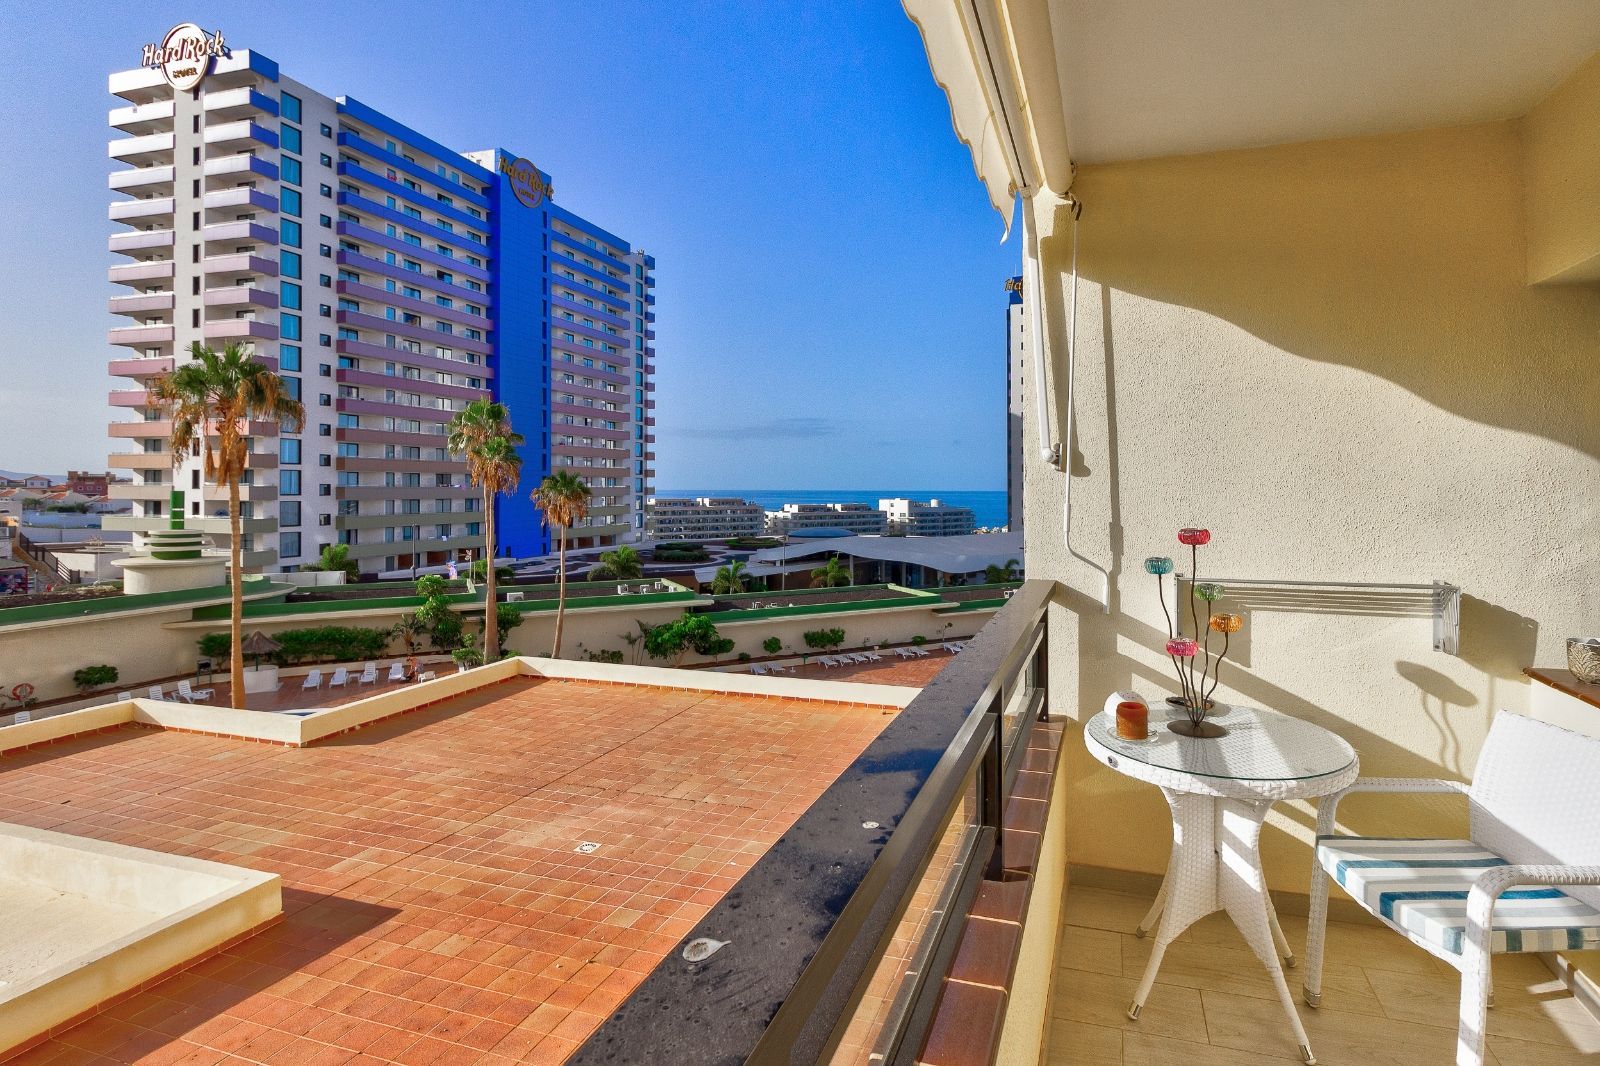 Apartment for sale in Tenerife 2